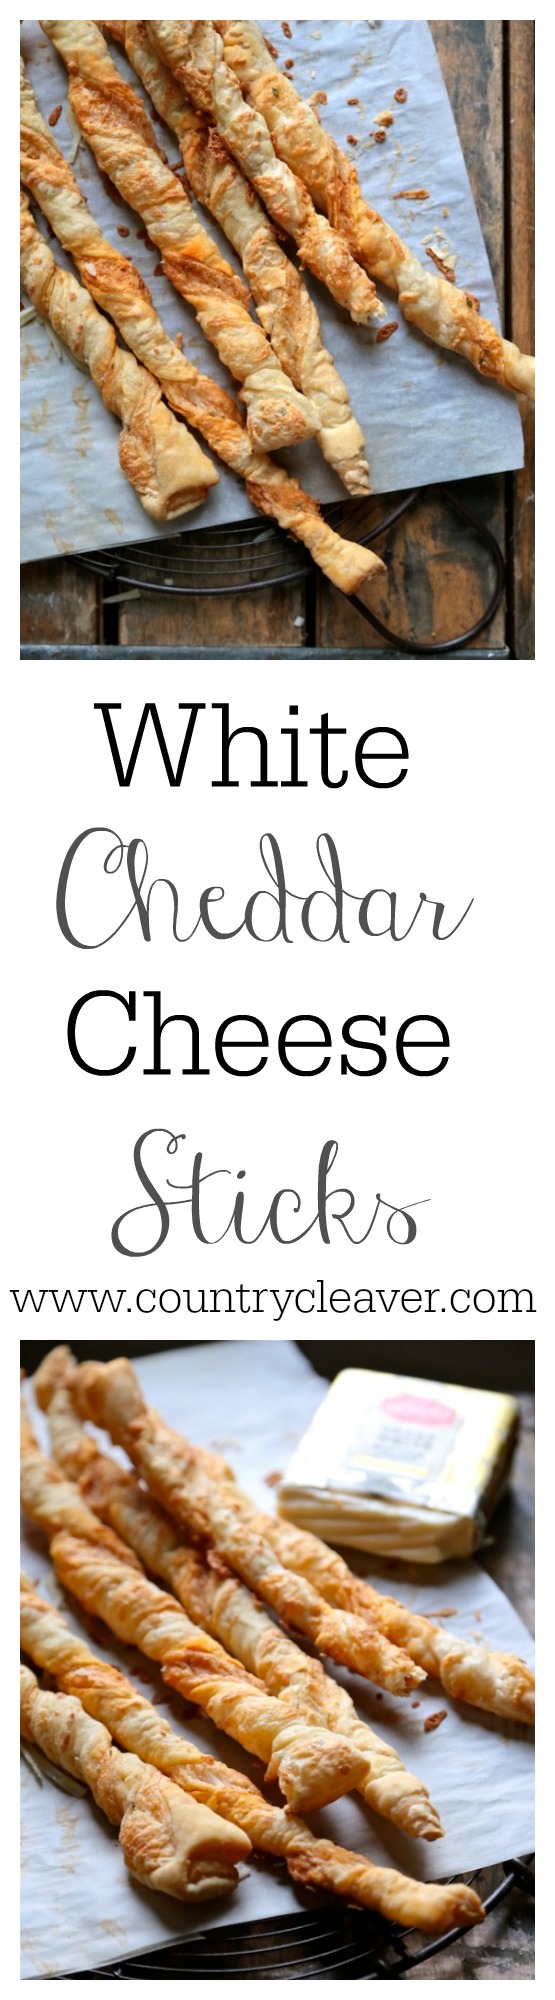 White Cheddar Cheese Sticks